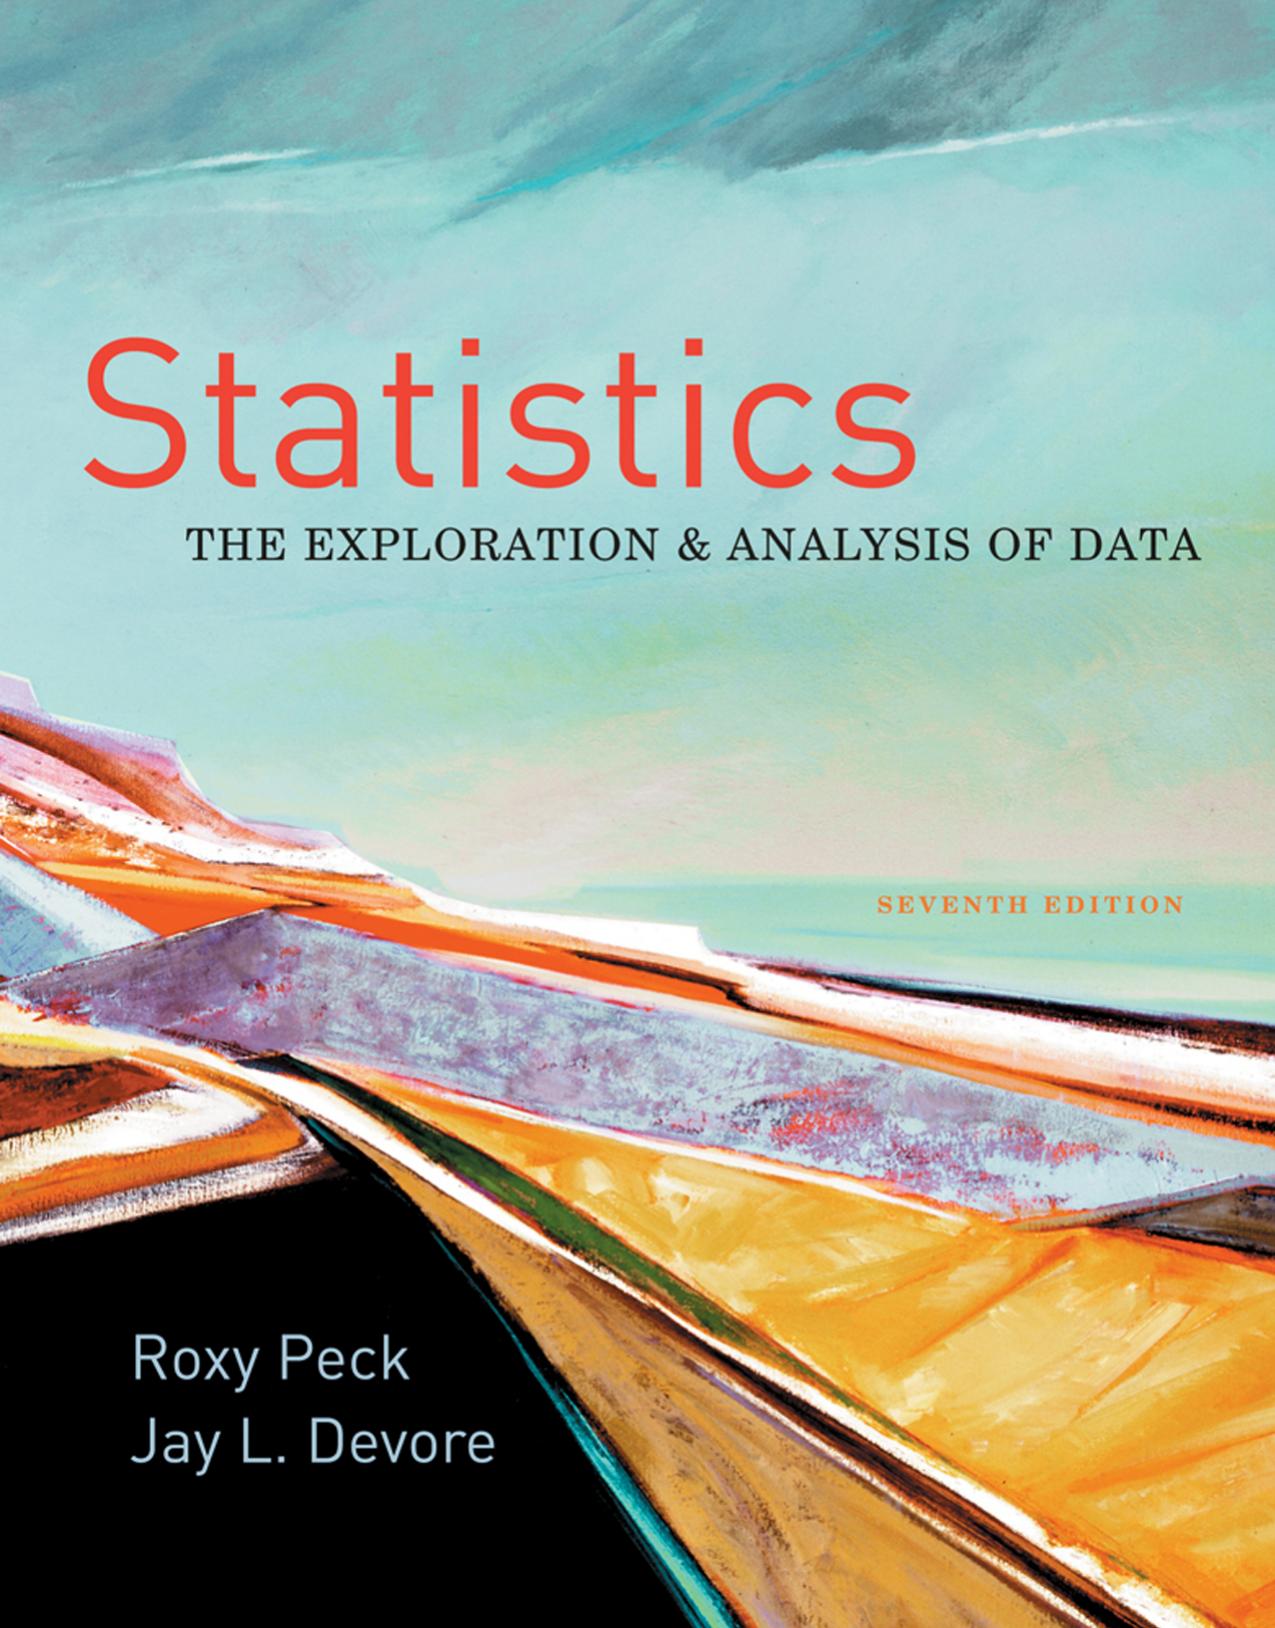 Statistics: The Exploration & Analysis of Data, 7th ed.